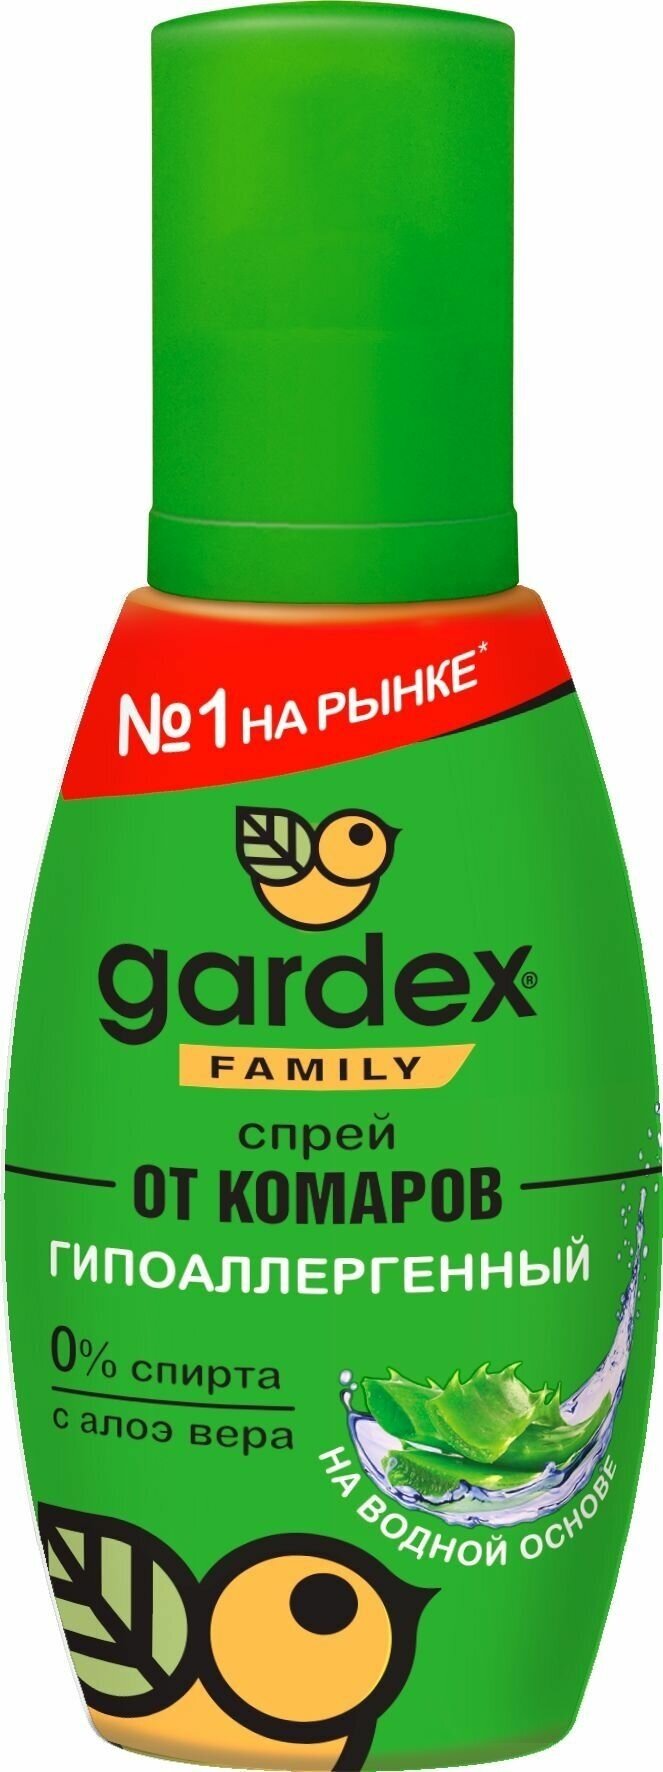 Спрей от комаров Gardex Family 100мл - фото №1